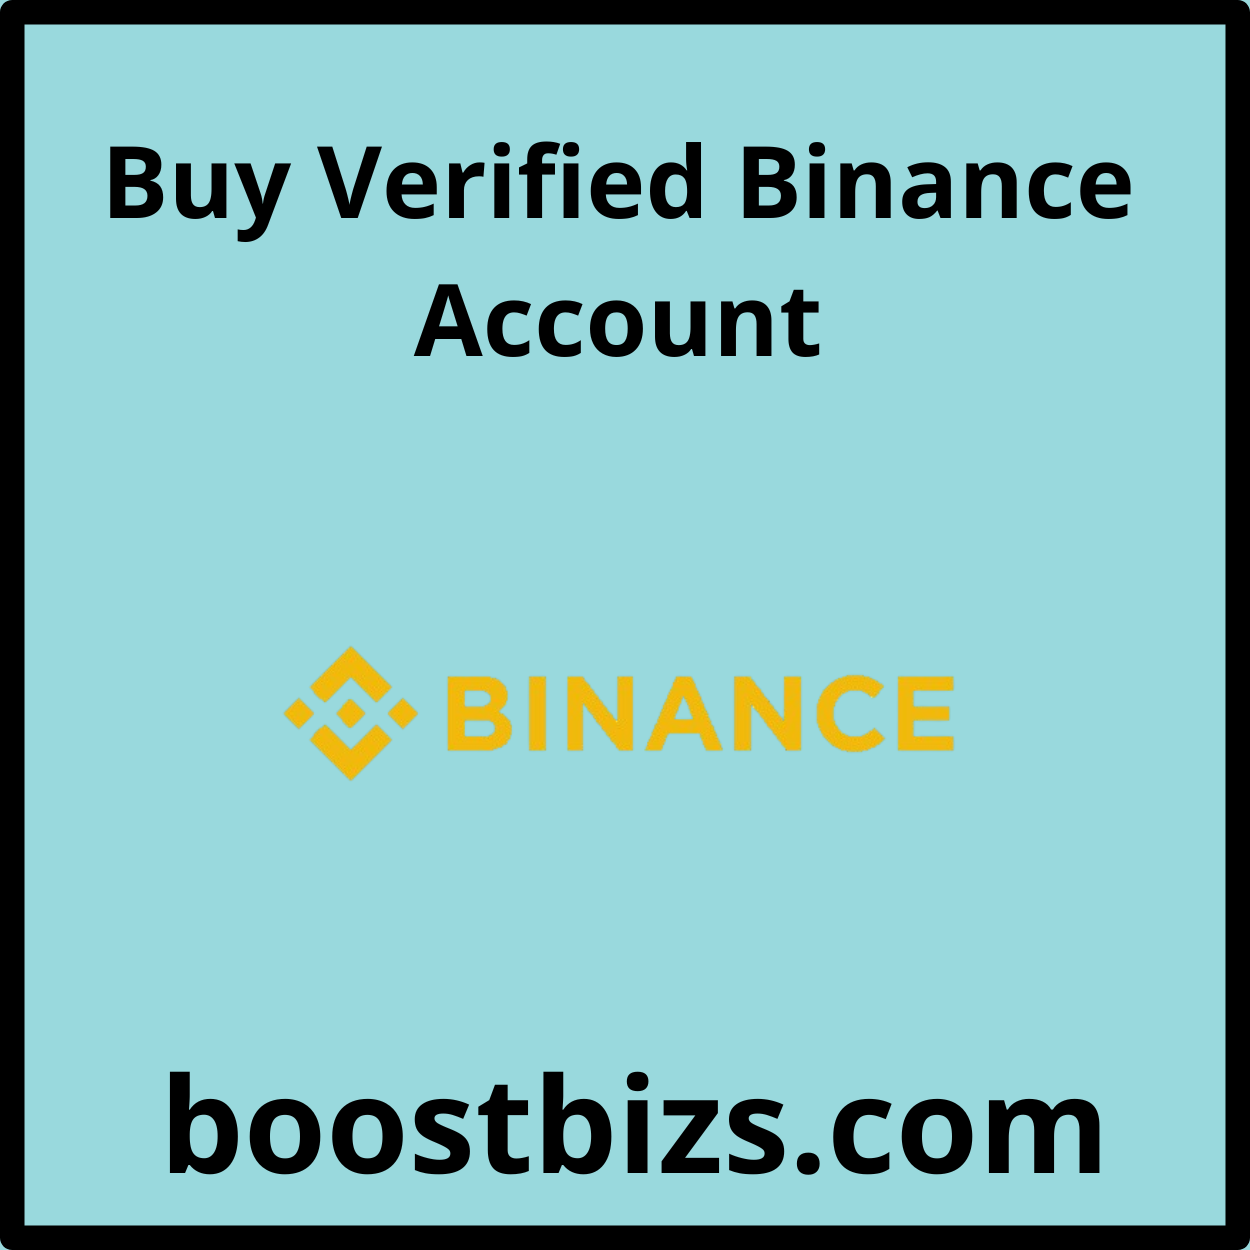 Buy Verified Binance Accounts - 100% safe and verified accounts